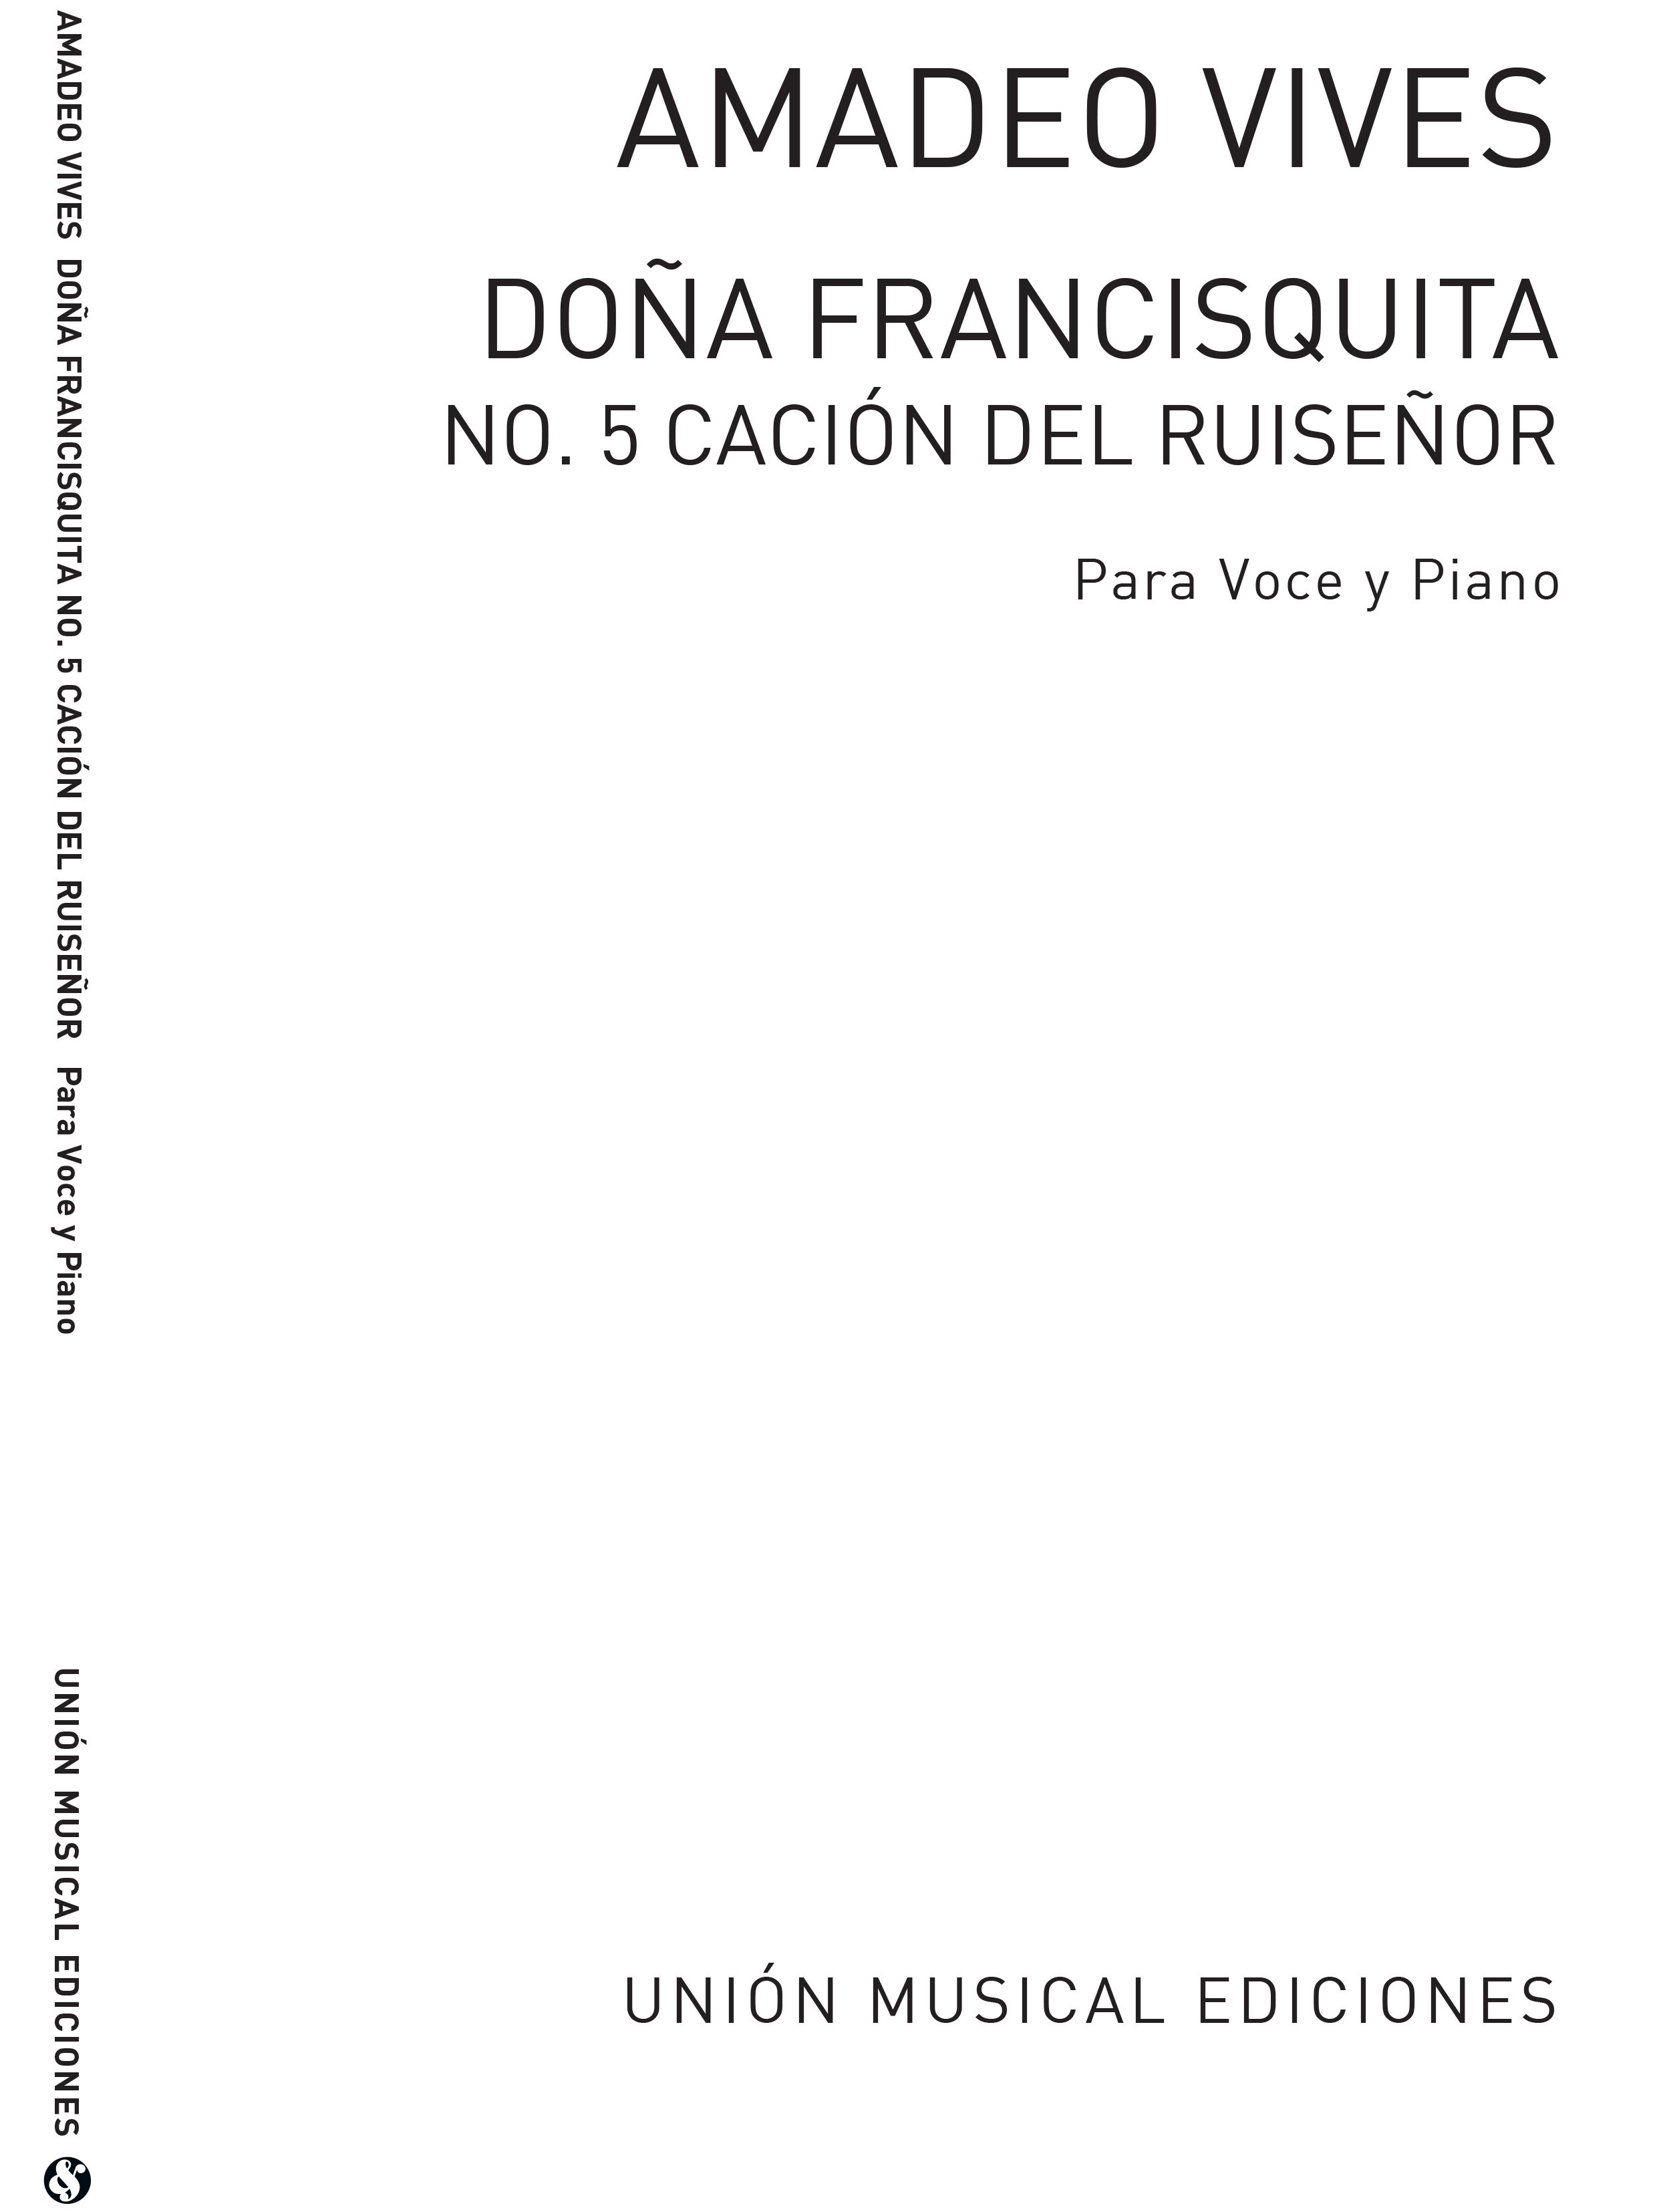 Amadeo Vives: Cancion Del Ruisenor De Dona Francisquita: Opera: Instrumental